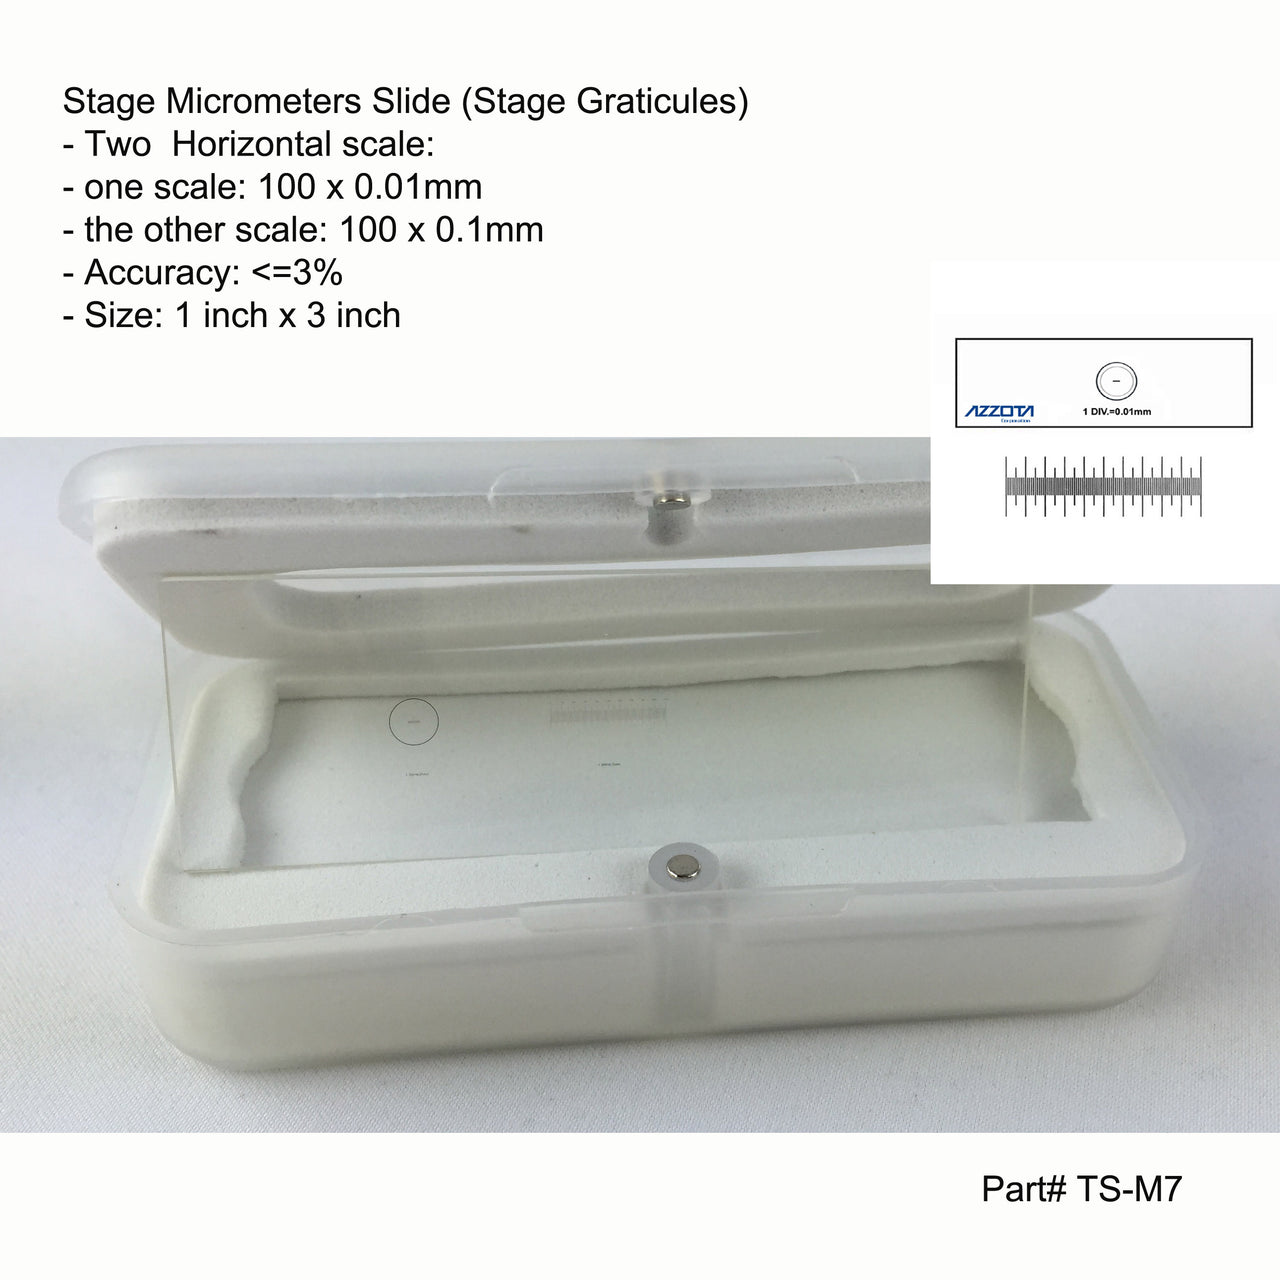 TS-M7 Stage Micrometers Slide